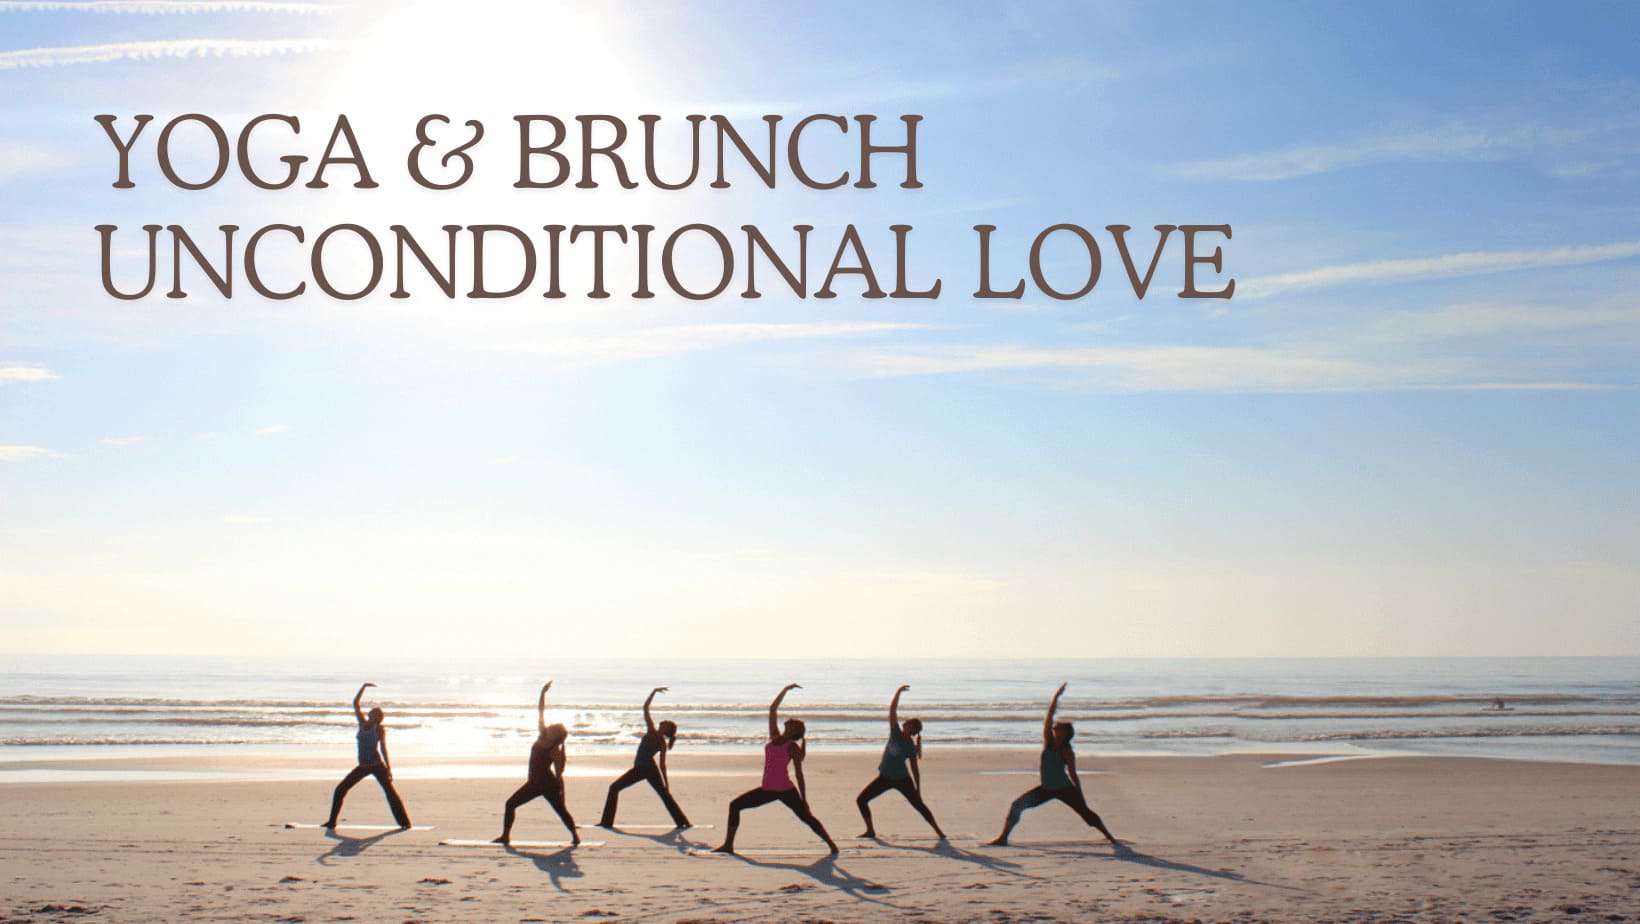 Yoga Brunch unconditional love